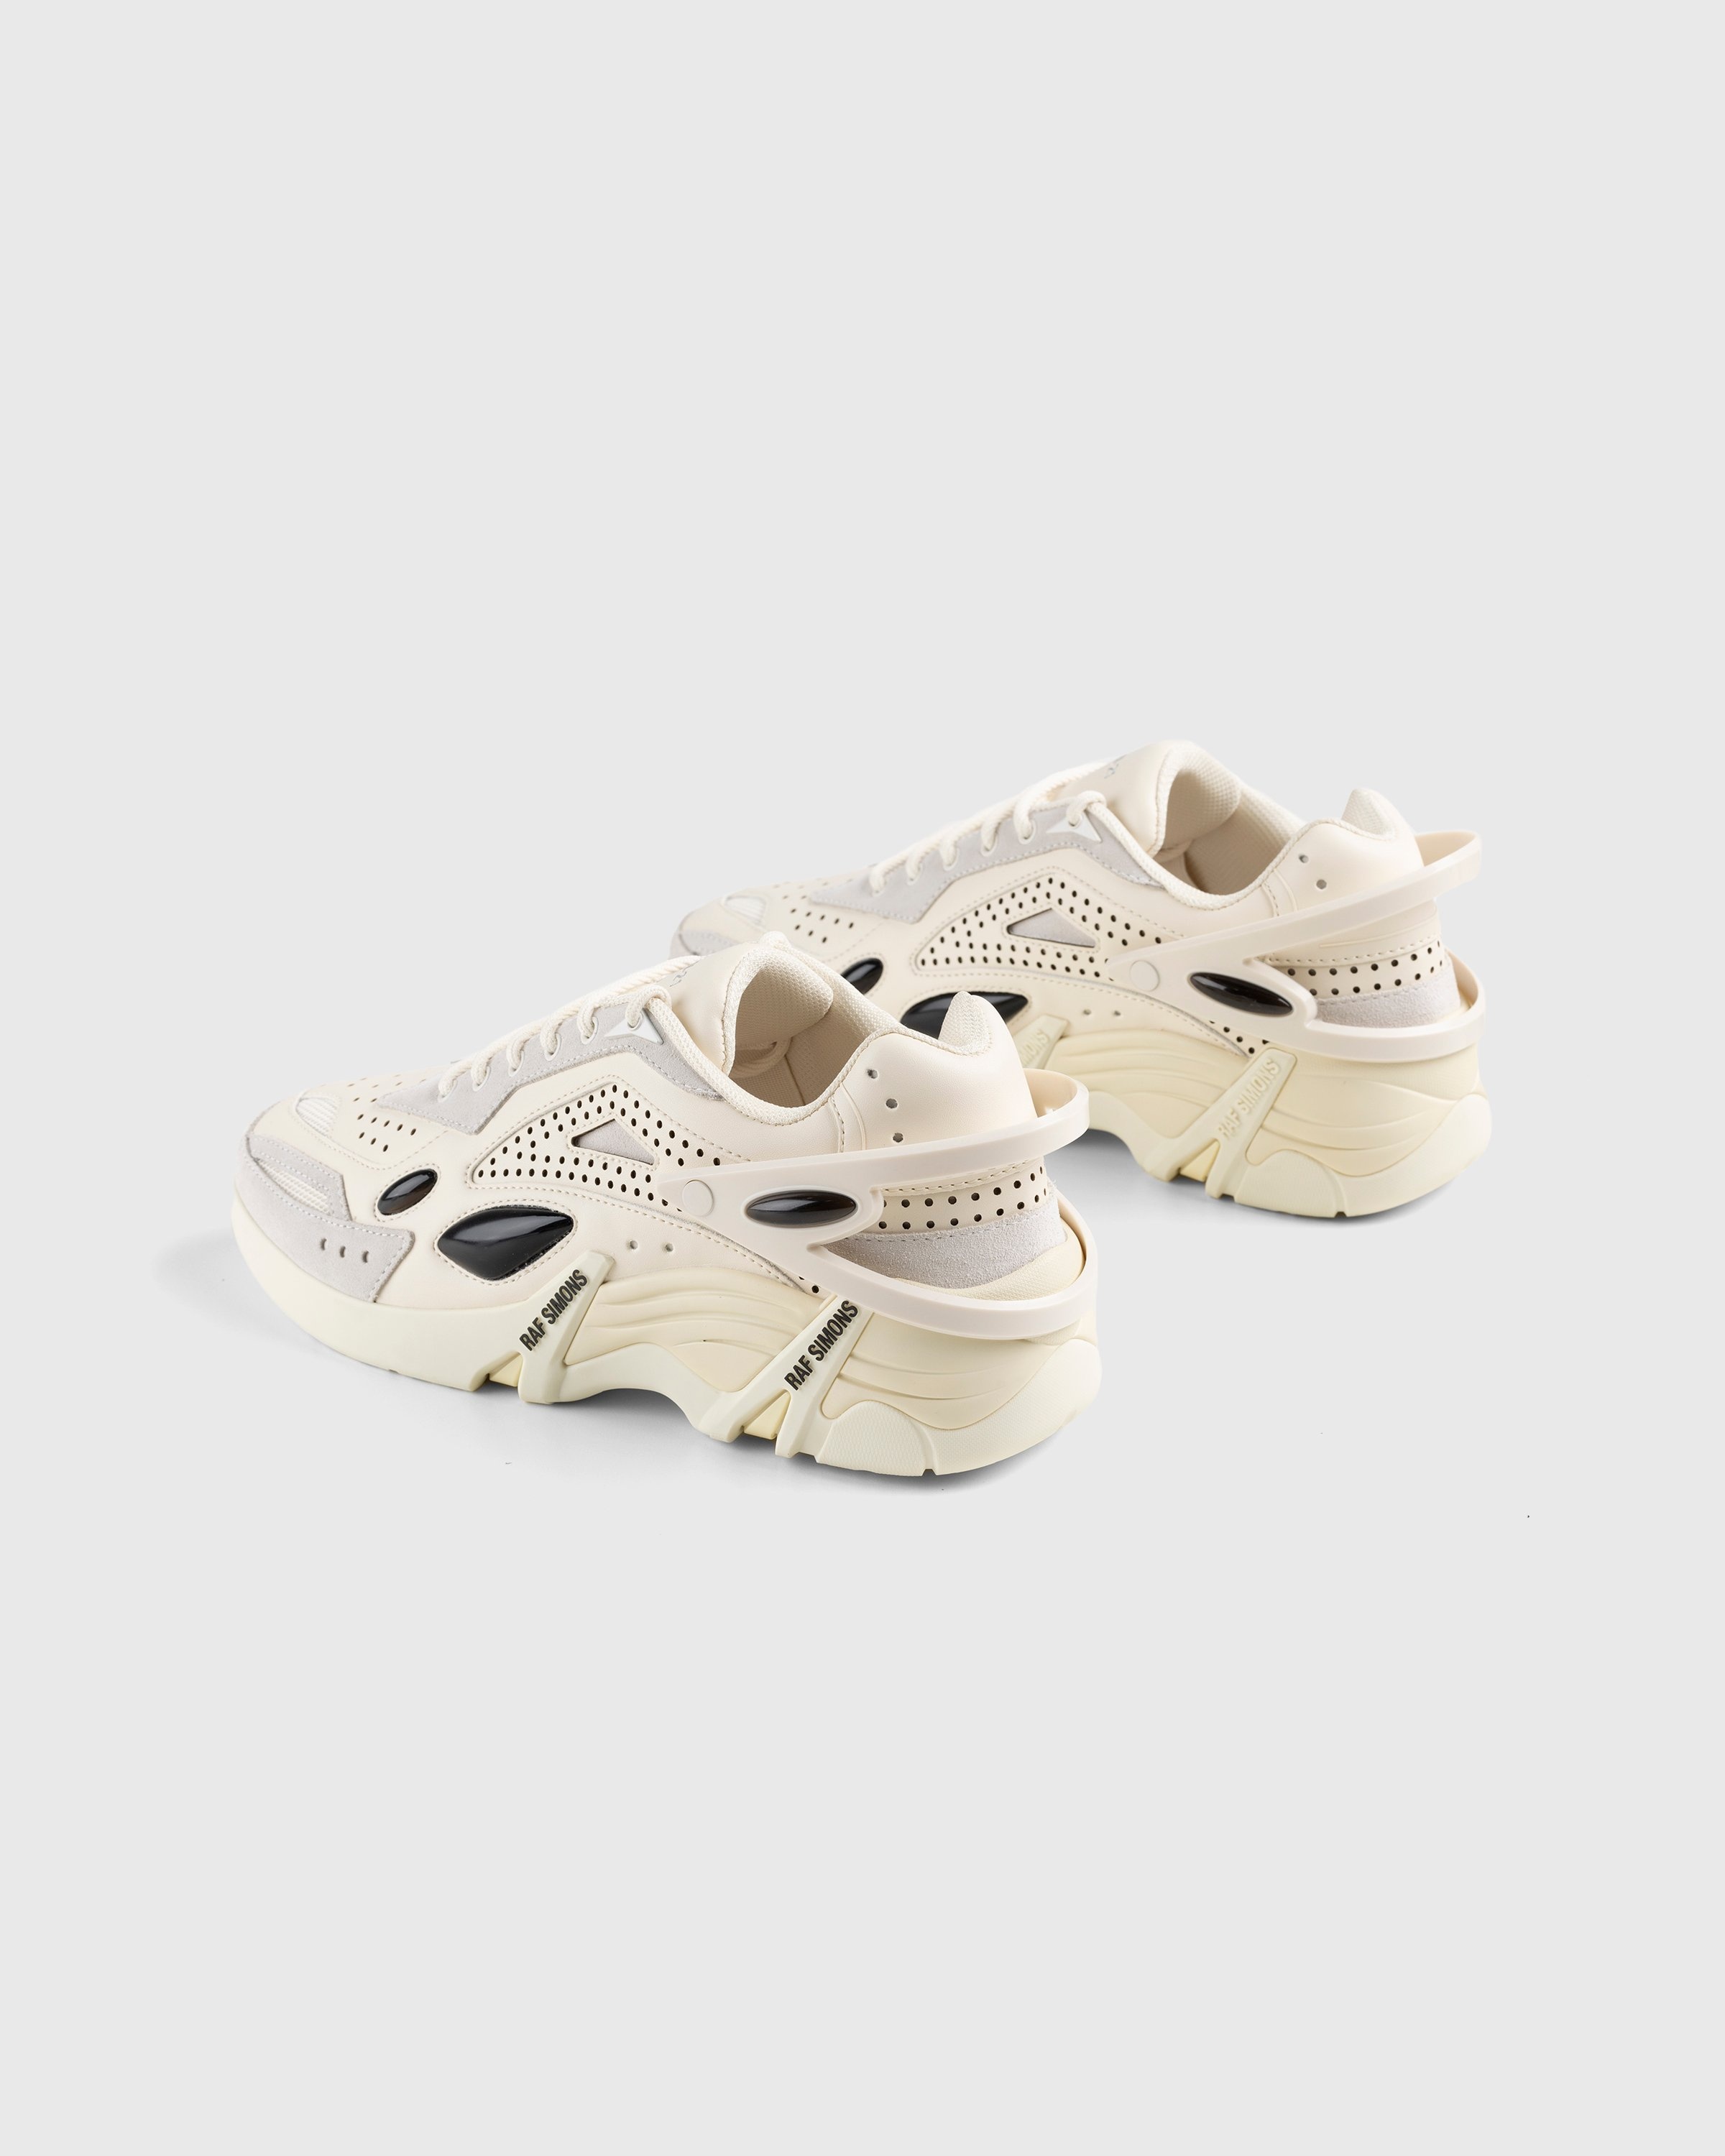 Raf Simons – Cylon 21 White - Sneakers - White - Image 3